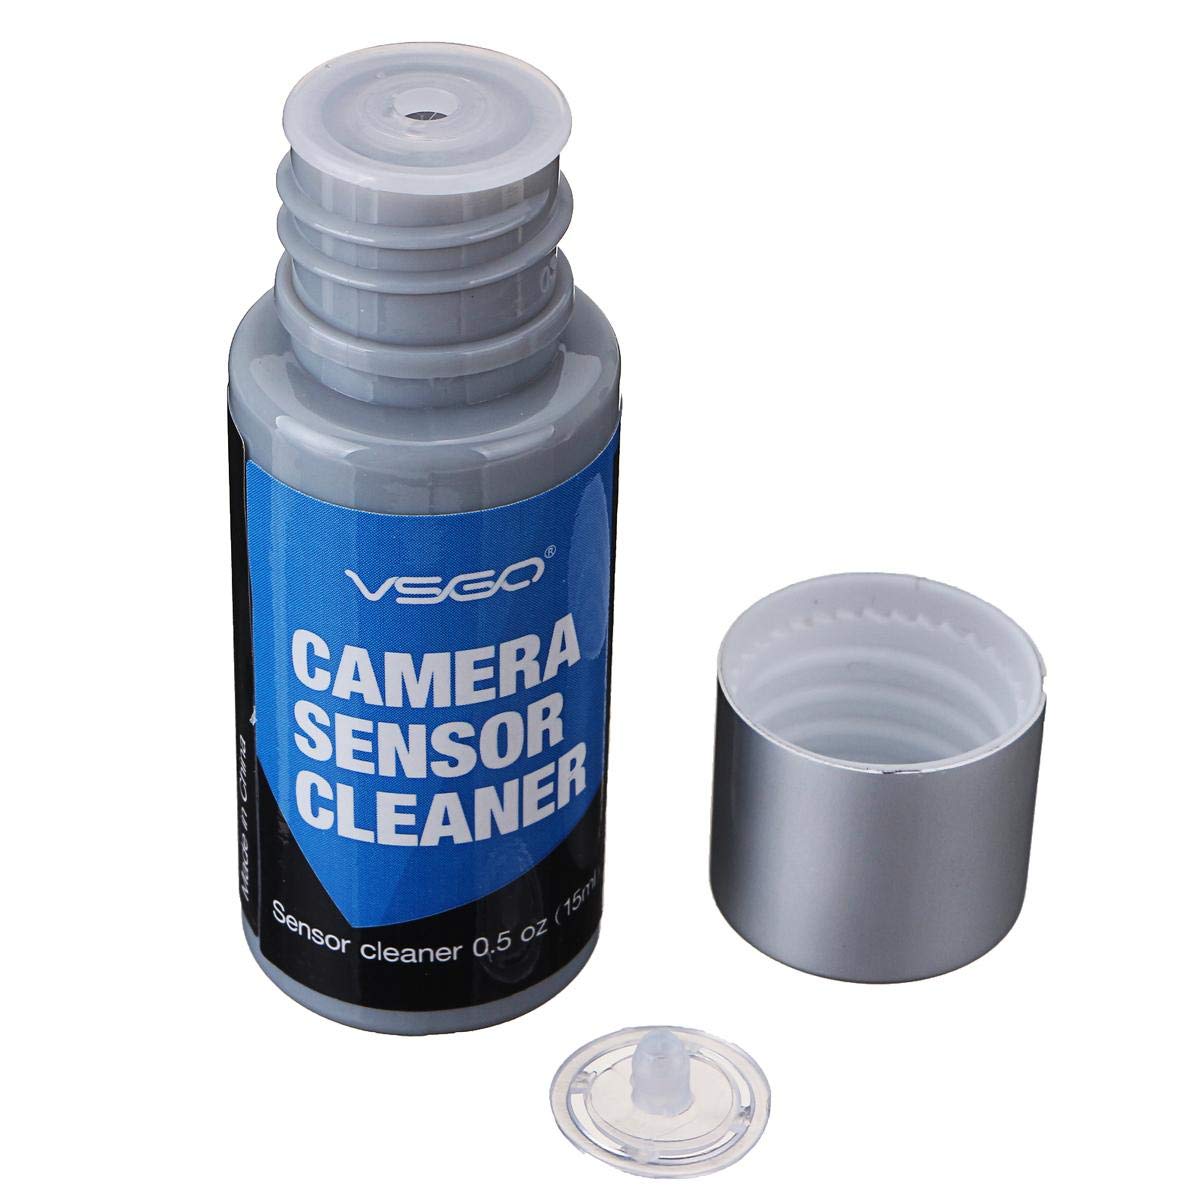 VSGO DDR-24 Full-Frame Sensor Cleaning Kit - The Camerashop